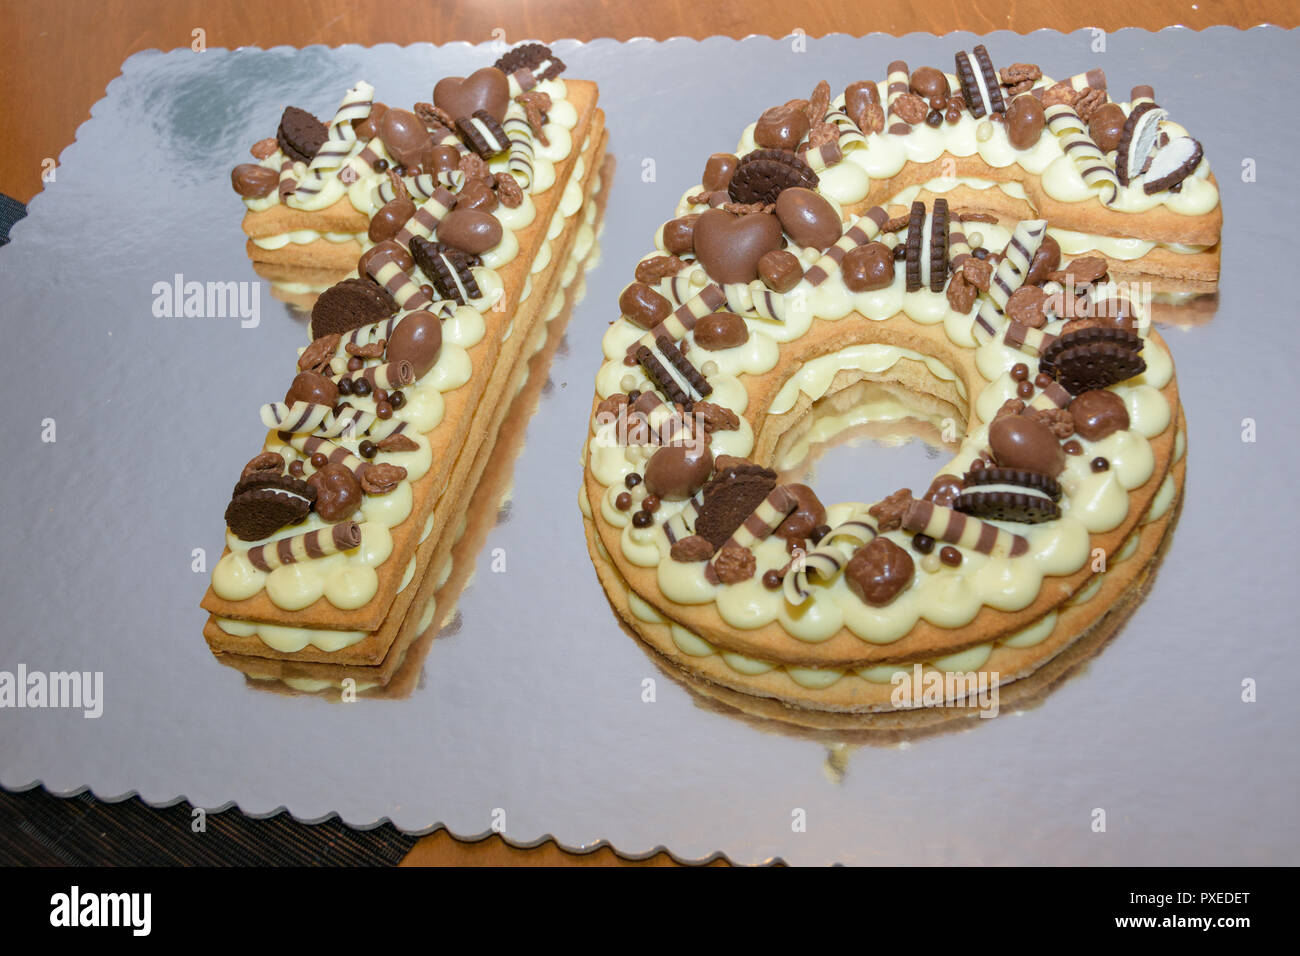 Original Sweet Sixteen birthday cake decorated with chocolate candies Stock Photo